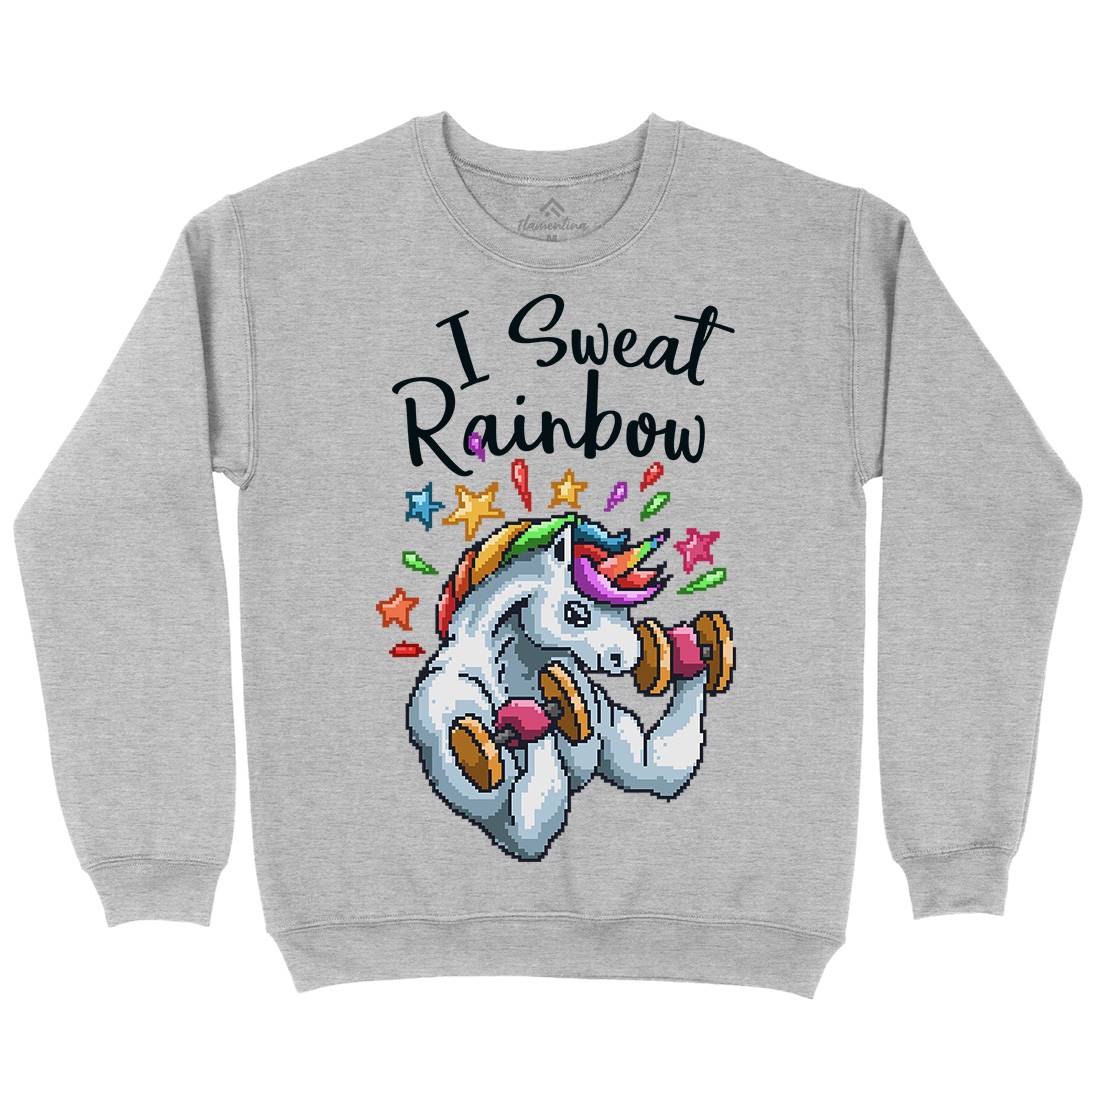 I Sweat Rainbow Mens Crew Neck Sweatshirt Retro B916